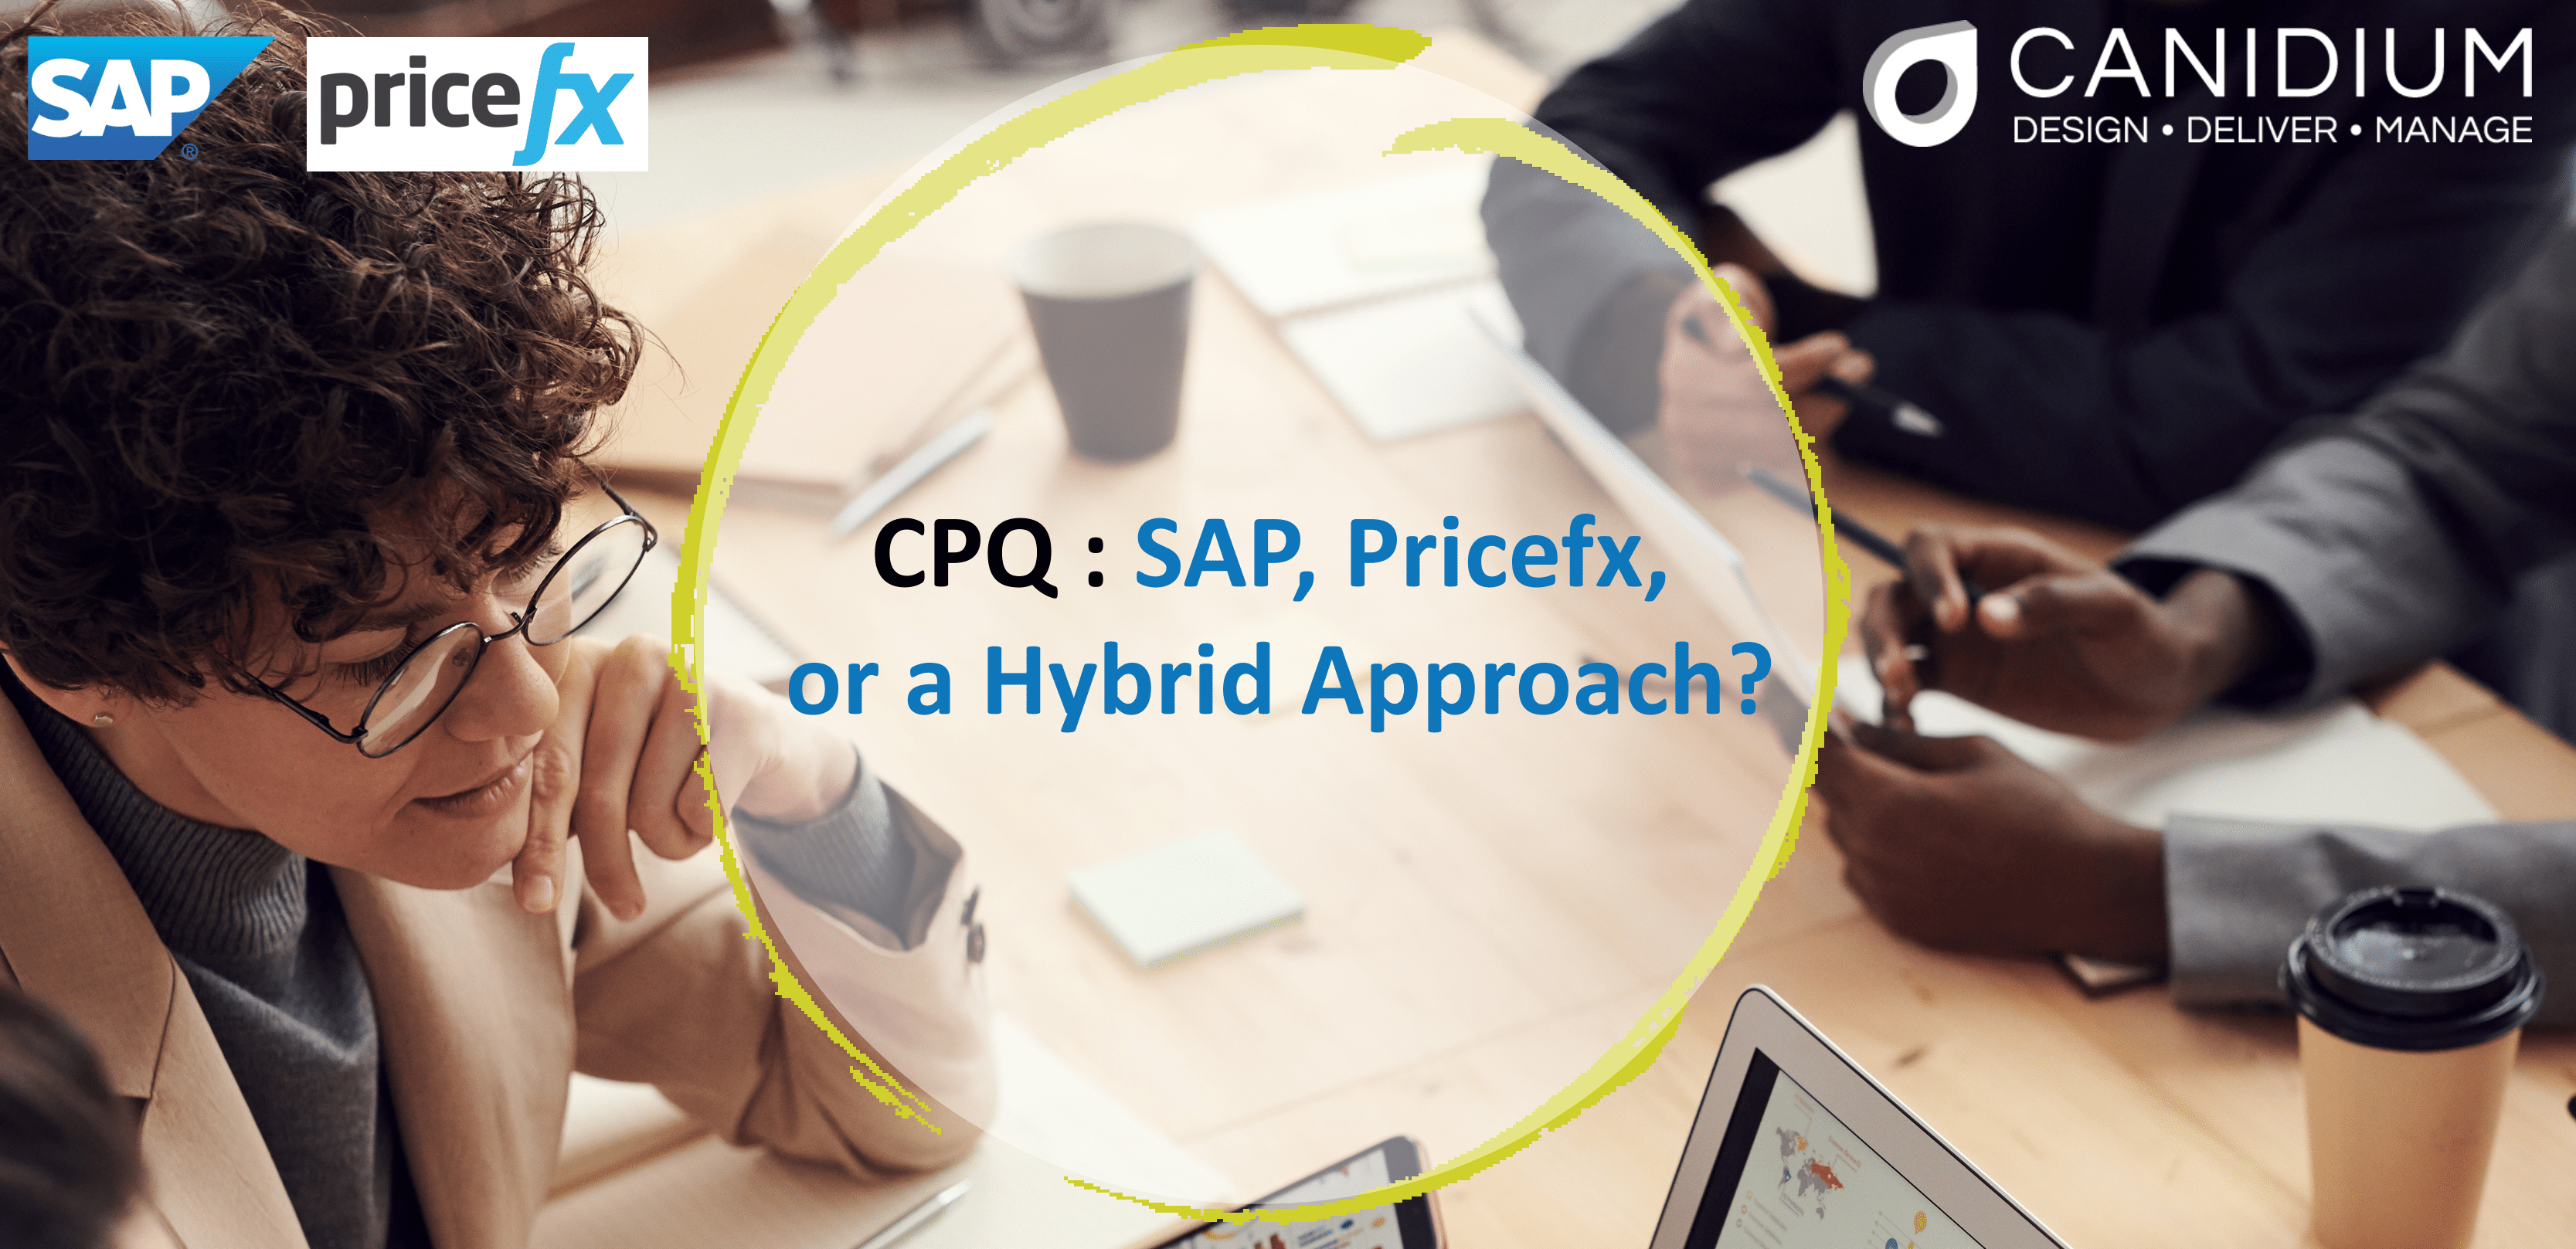 CPQ: SAP, Pricefx, or a Hybrid Approach?